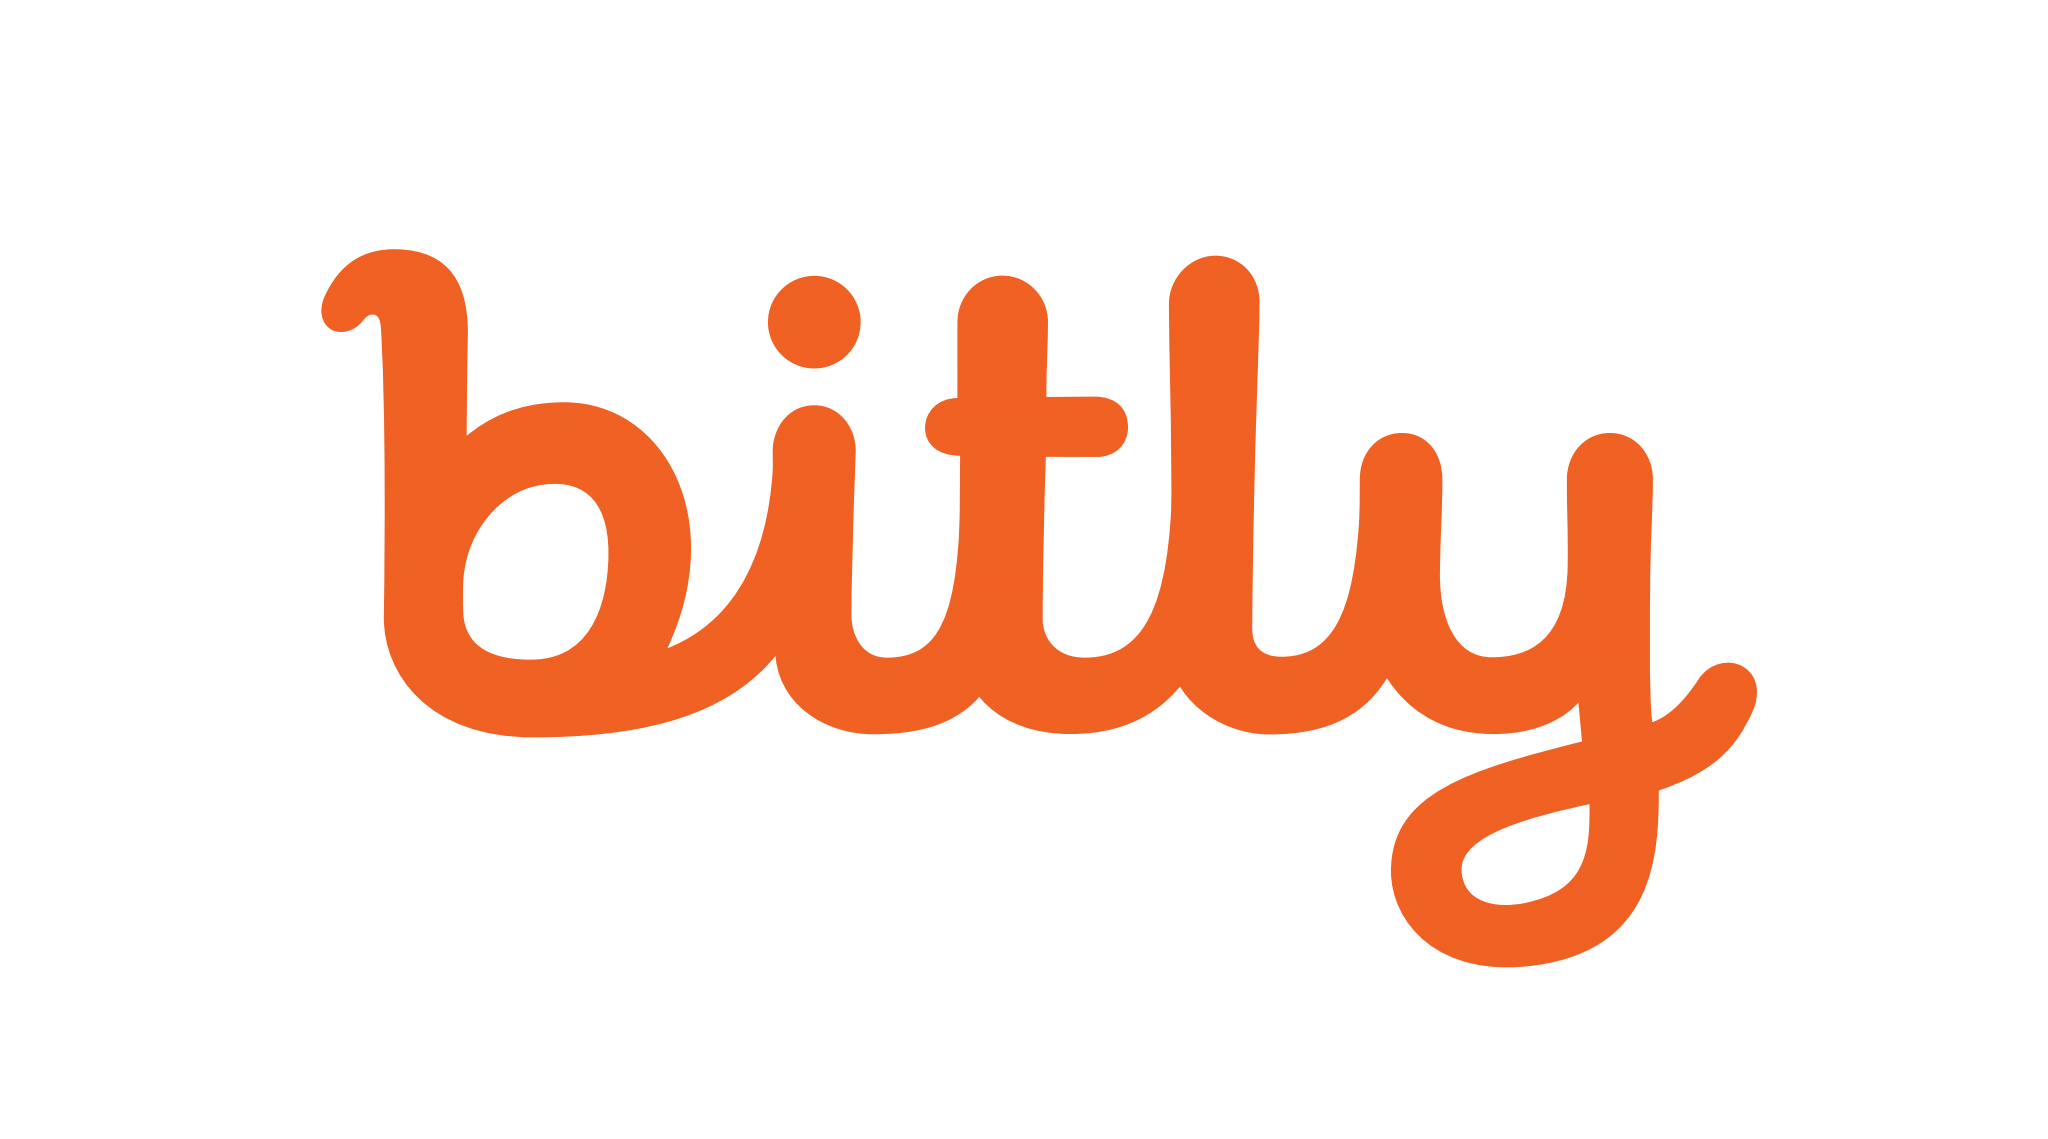 Bitly